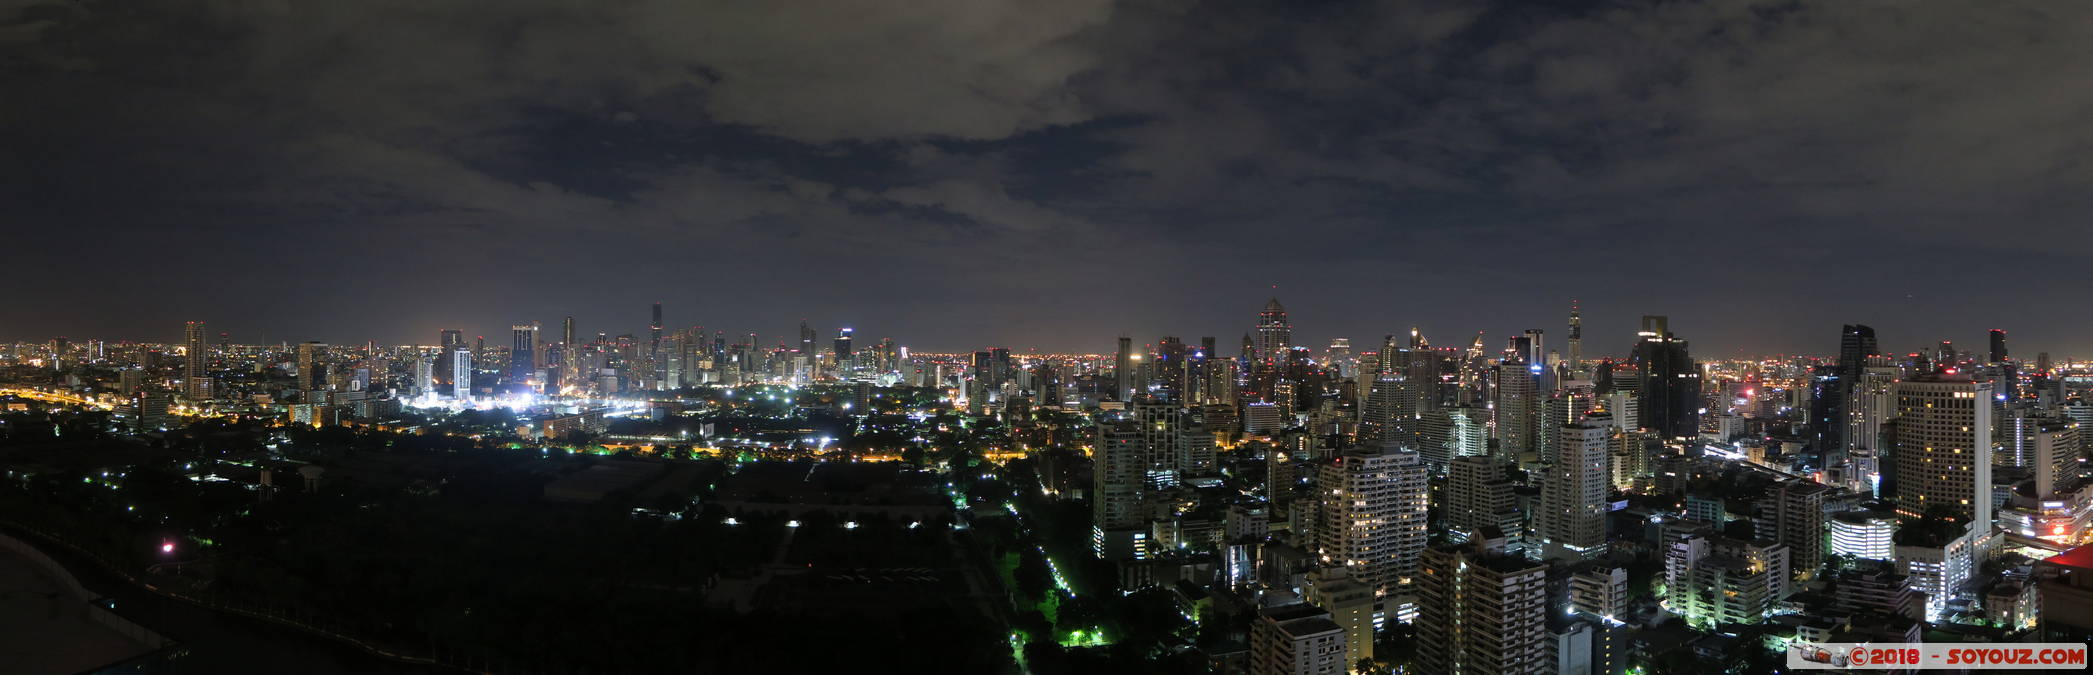 Bangkok by Night - Panorama on the city from 35th Floor
Mots-clés: Bang Rak Bangkok geo:lat=13.73315274 geo:lon=100.56057304 geotagged Sukhumvit THA Thaïlande Nuit skyscraper panorama